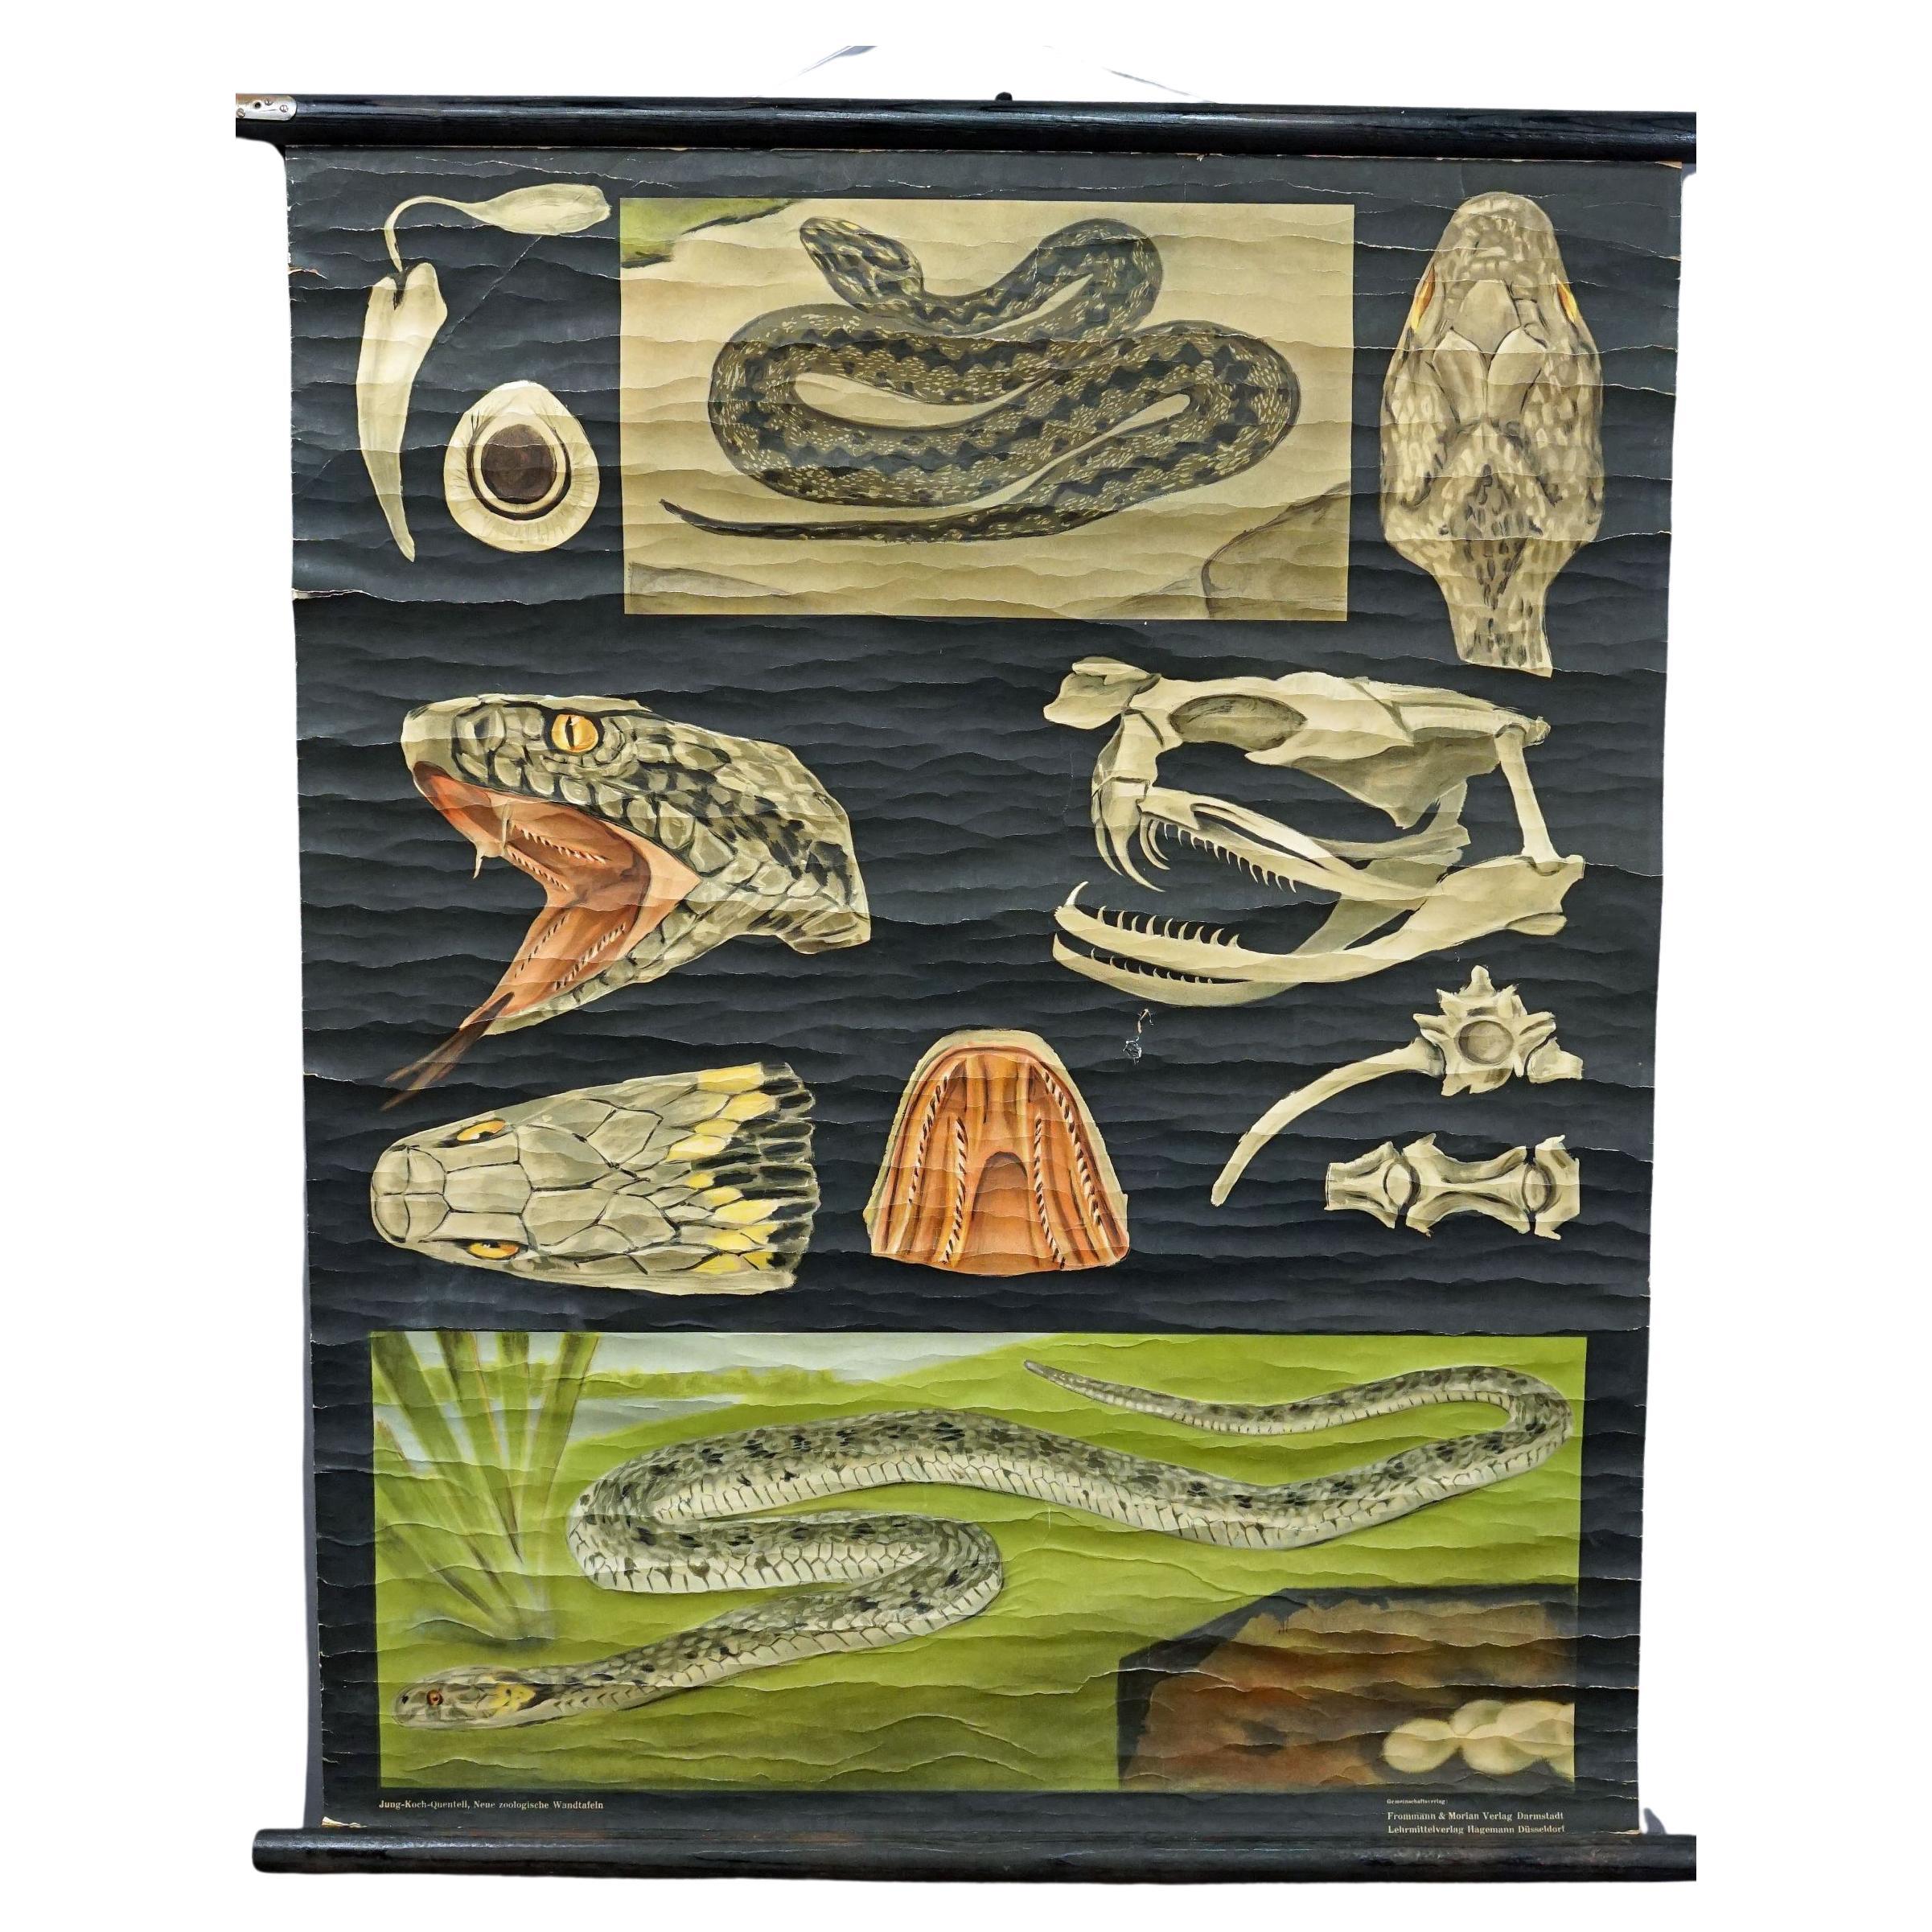 Jung Koch Quentell Old Print Mural Rollable Wall Chart Poster Snake Serpent